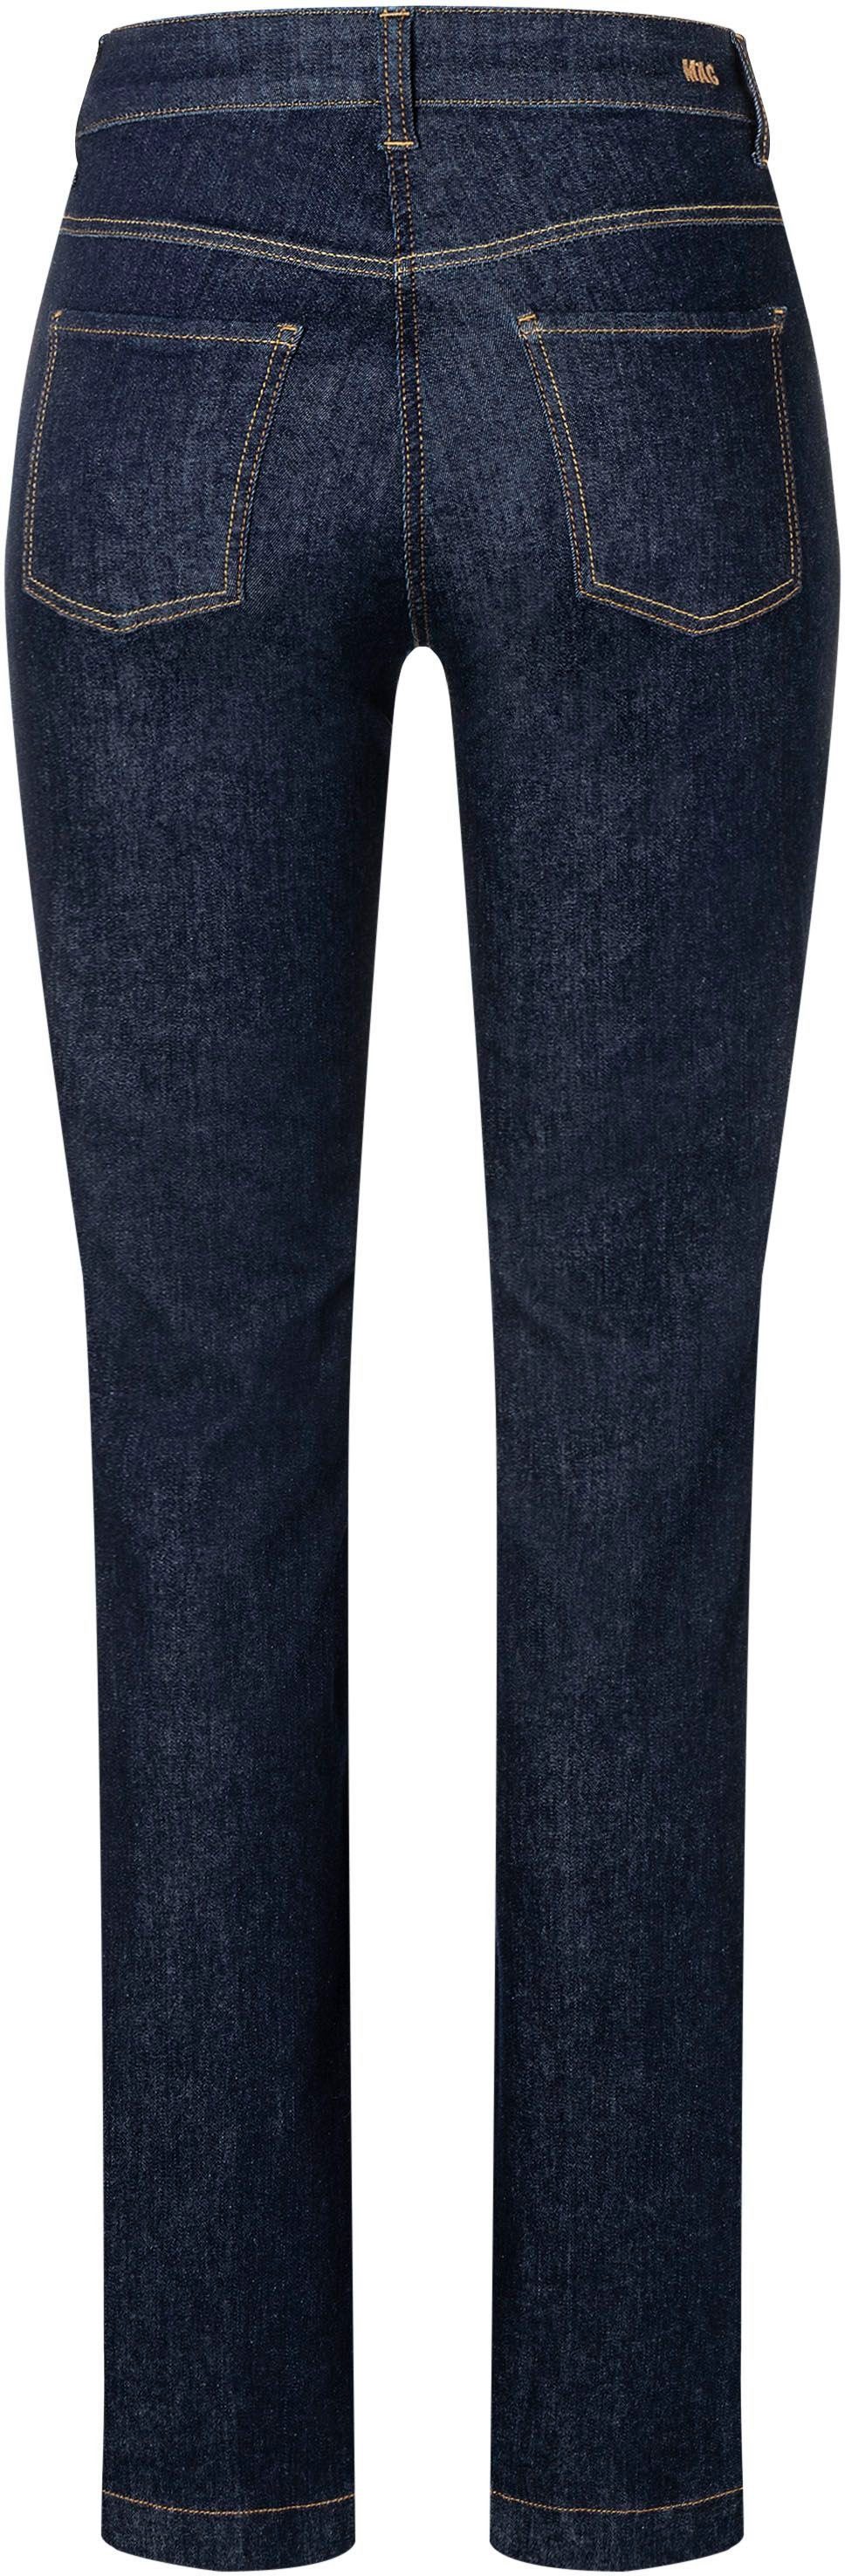 Hoher High-waist-Jeans BOOT, dank MAC Tragekomfort Baumwollqualität